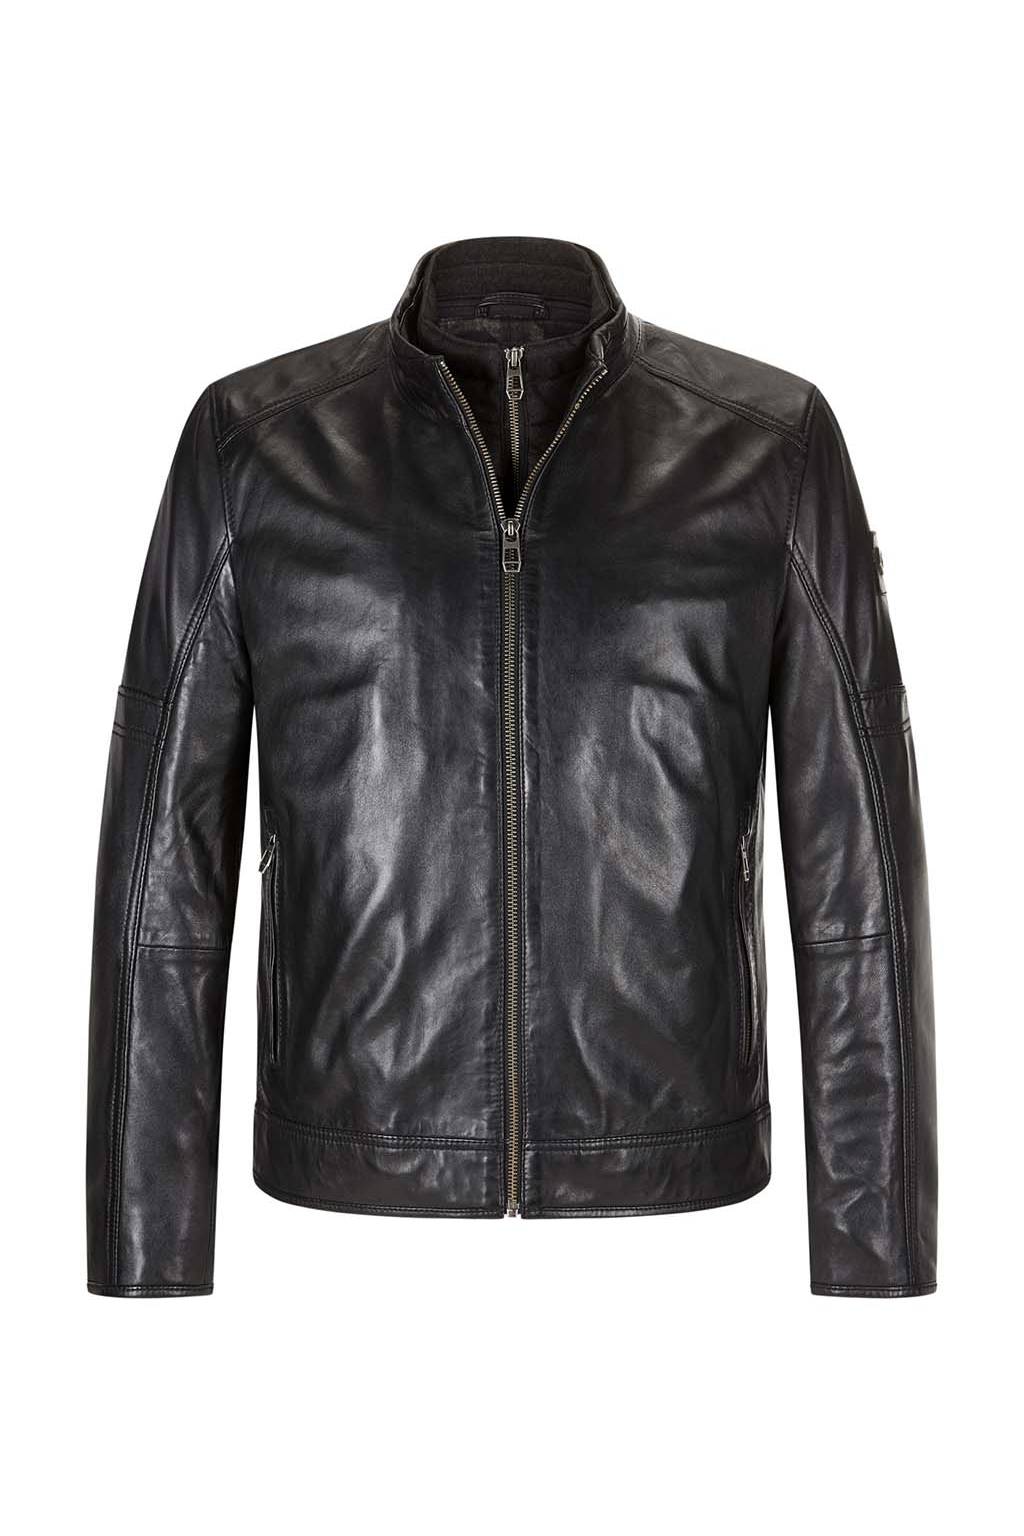 Milestone bender leather jacket - medinapiel.es